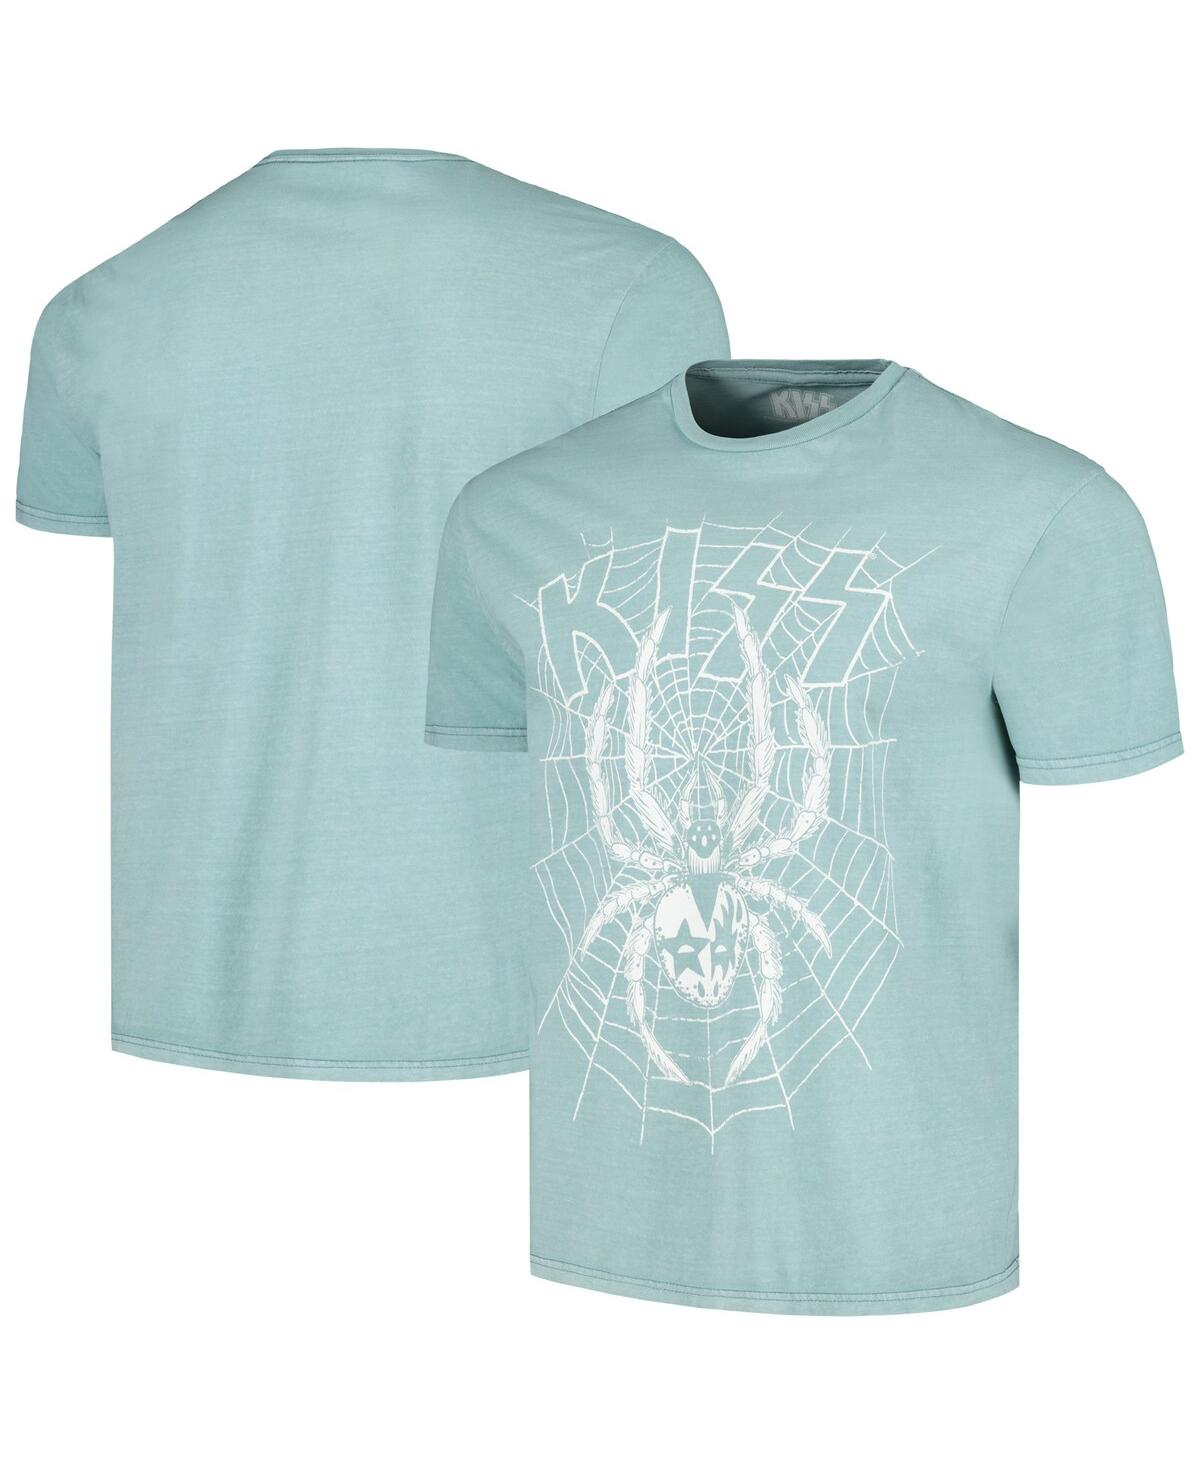 Shop Philcos Men's Light Blue Distressed Kiss Spider Washed Graphic T-shirt